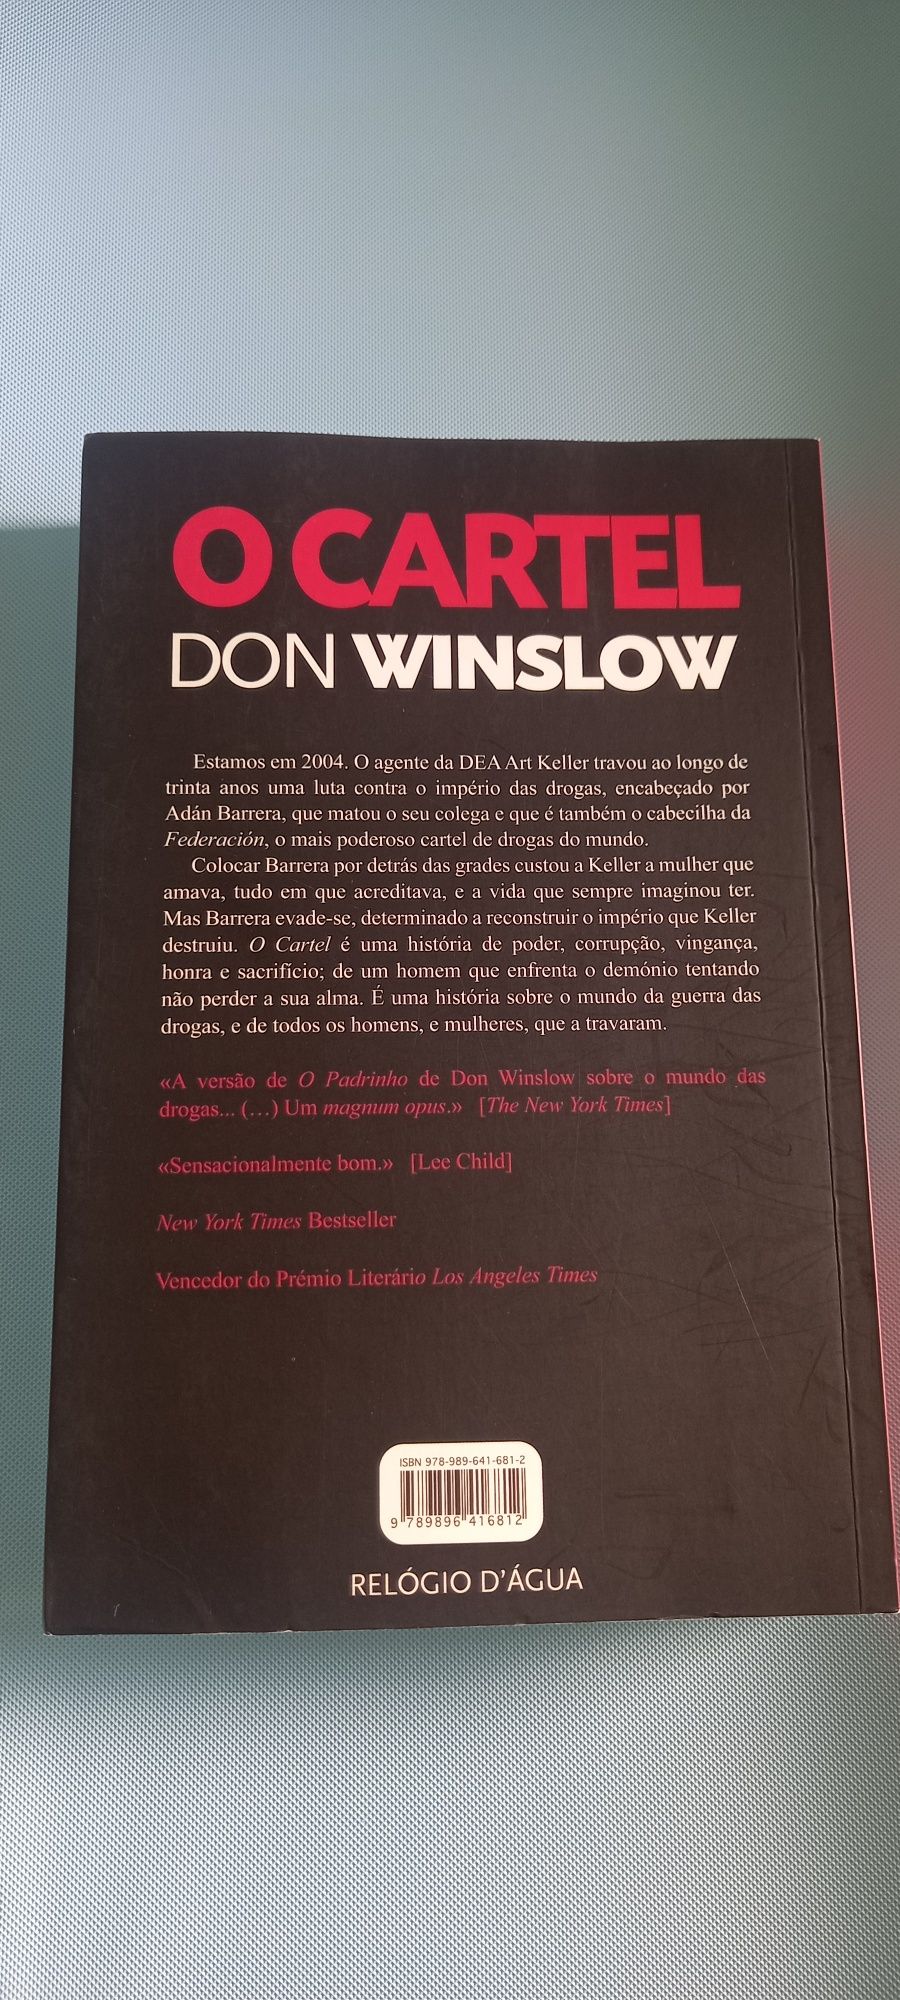 O Cartel [Don Winslow]